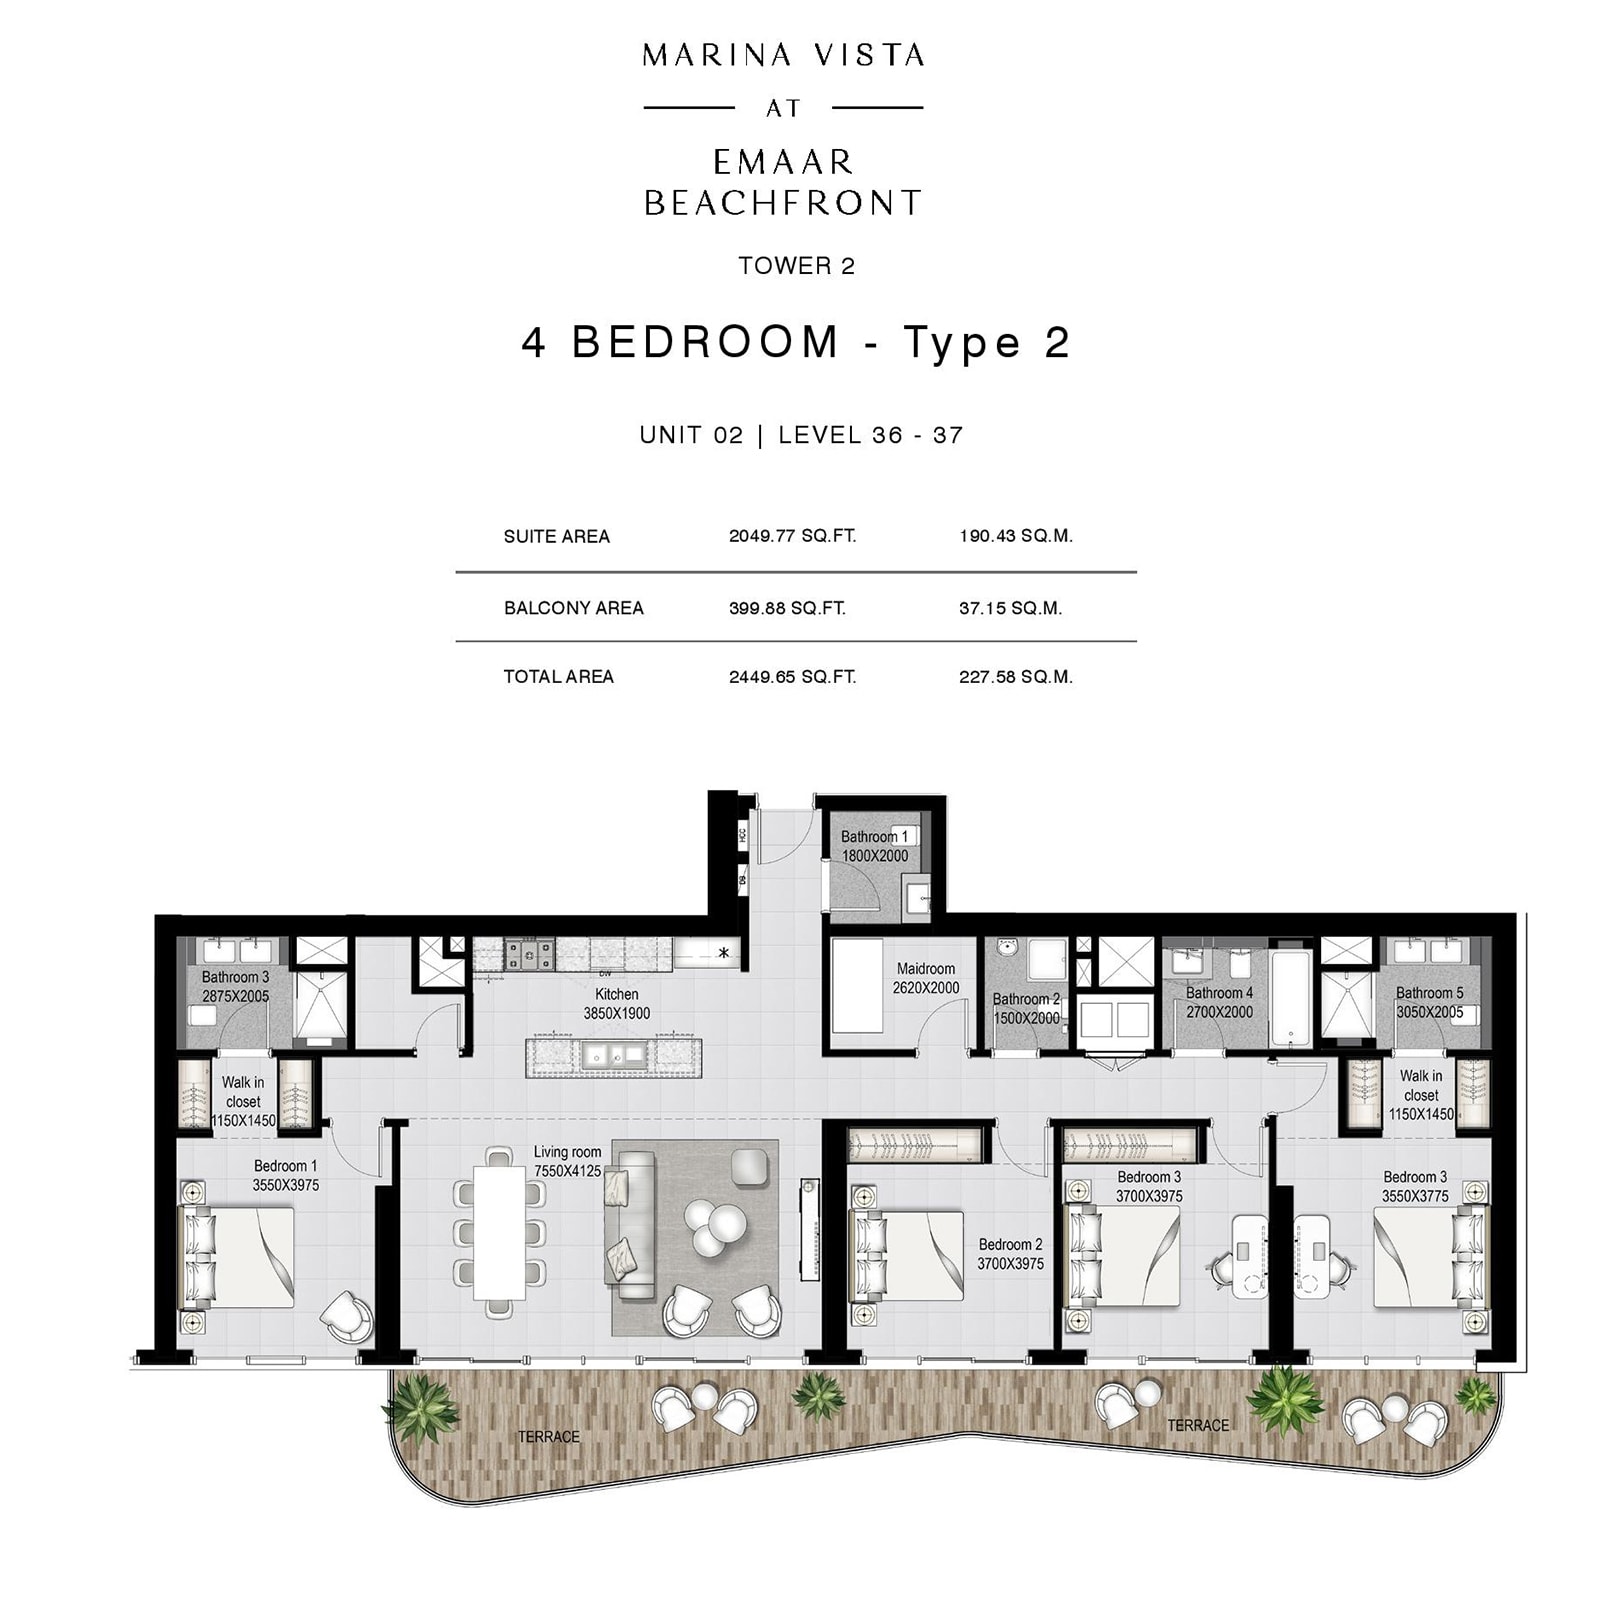 emaar Marina Vista apartments price dubai